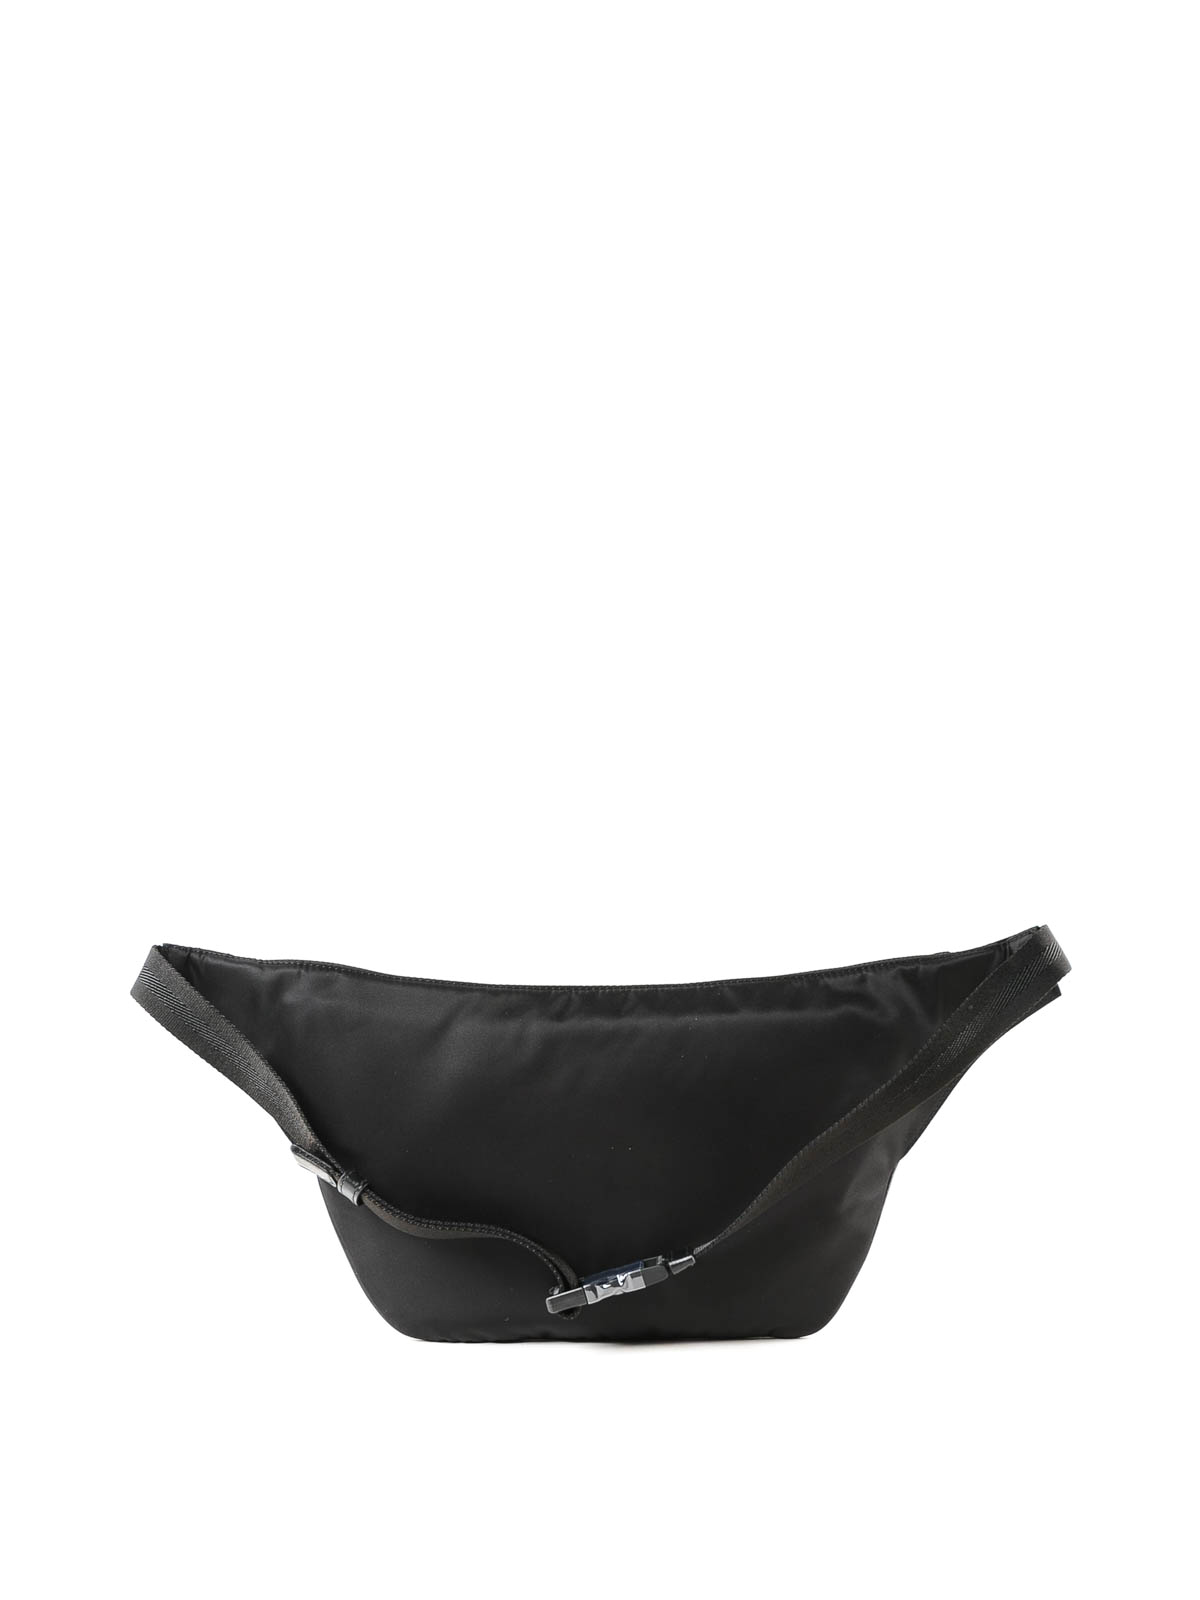 Dolce & Gabbana - Black nylon logo belt bag - belt bags - BM1660AZ6758B956